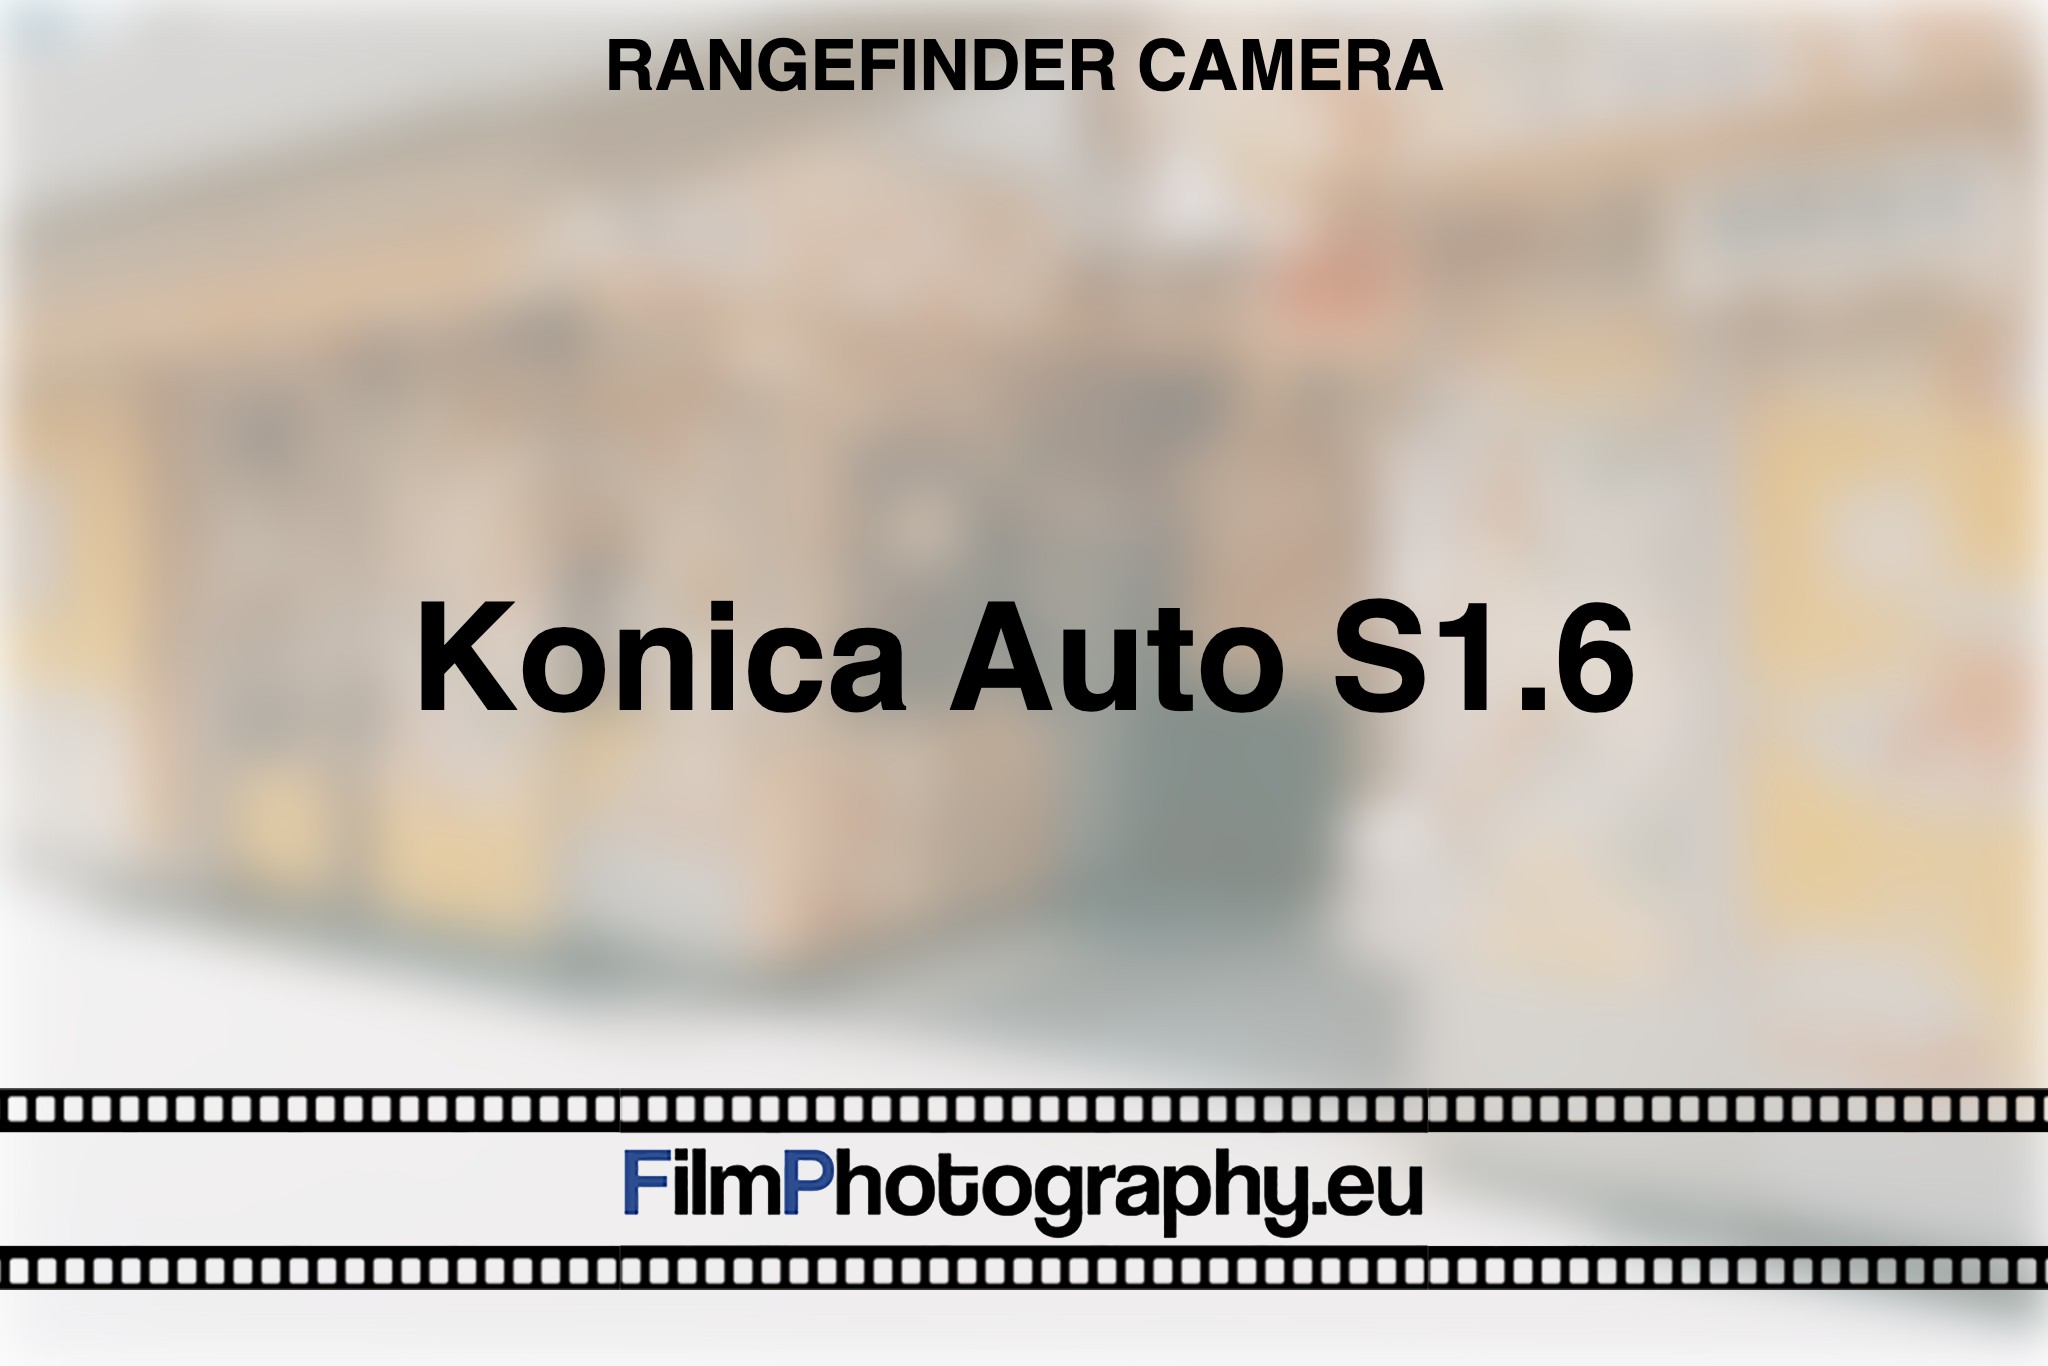 konica-auto-s1-6-rangefinder-camera-bnv